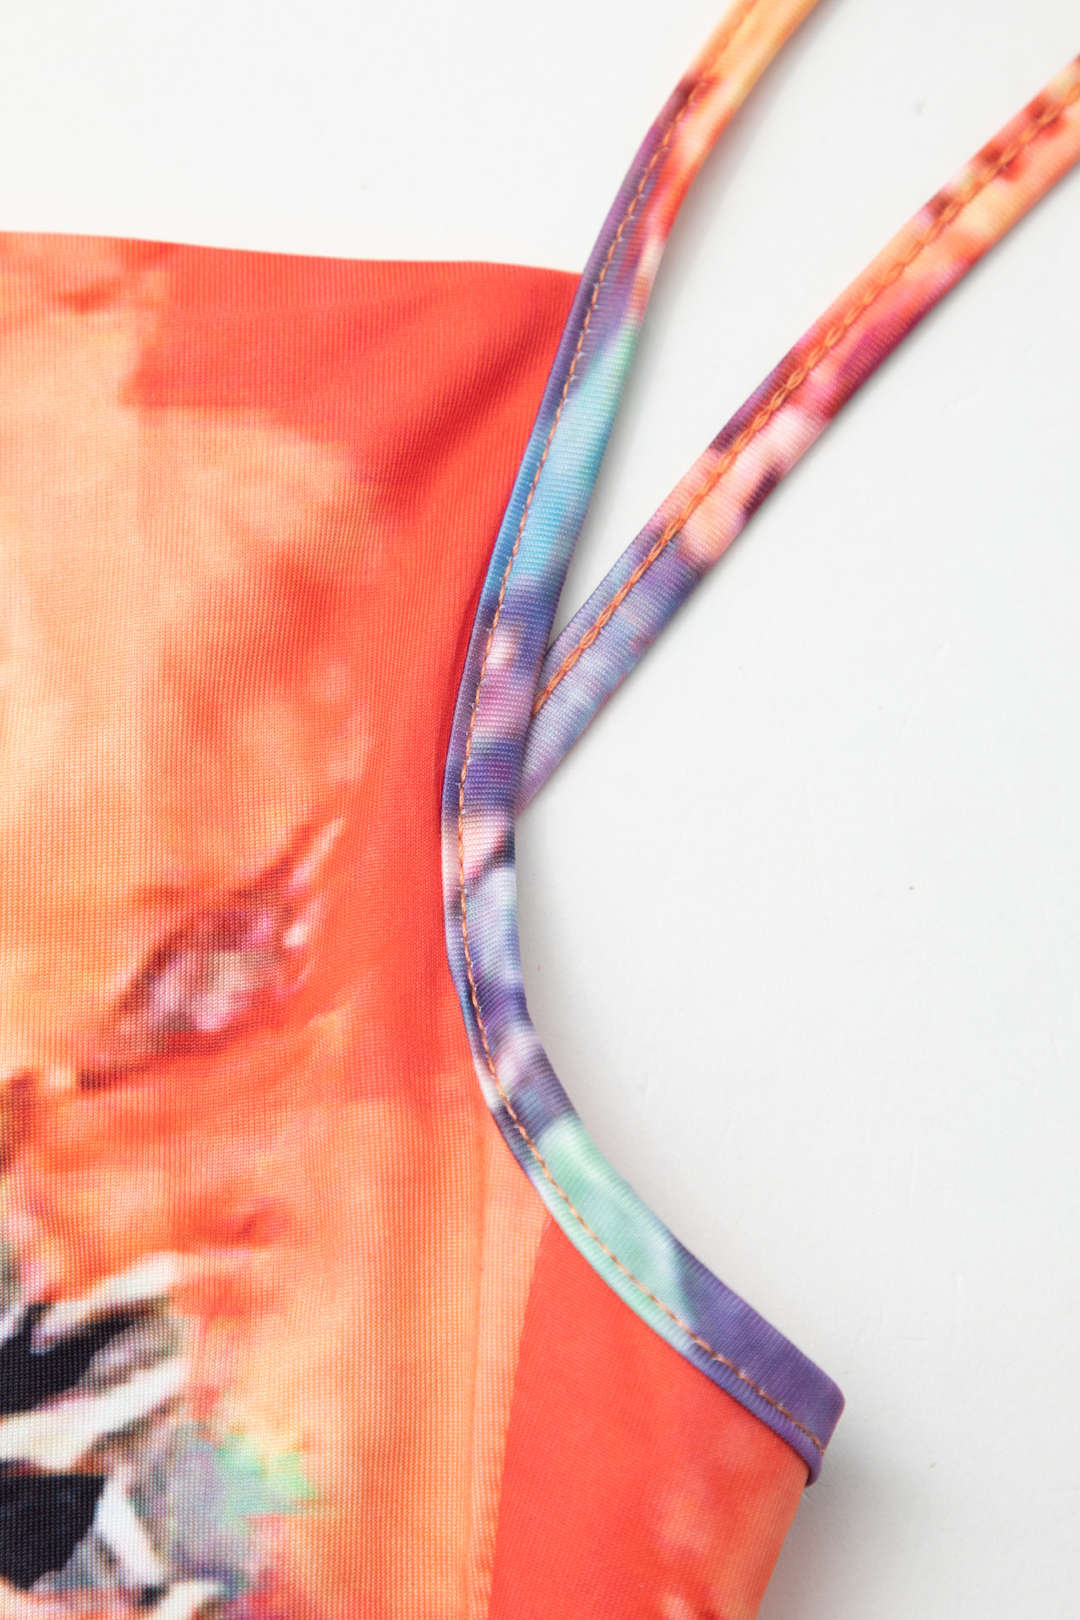 Abstract Print Cowl Neck Slip Maxi Dress